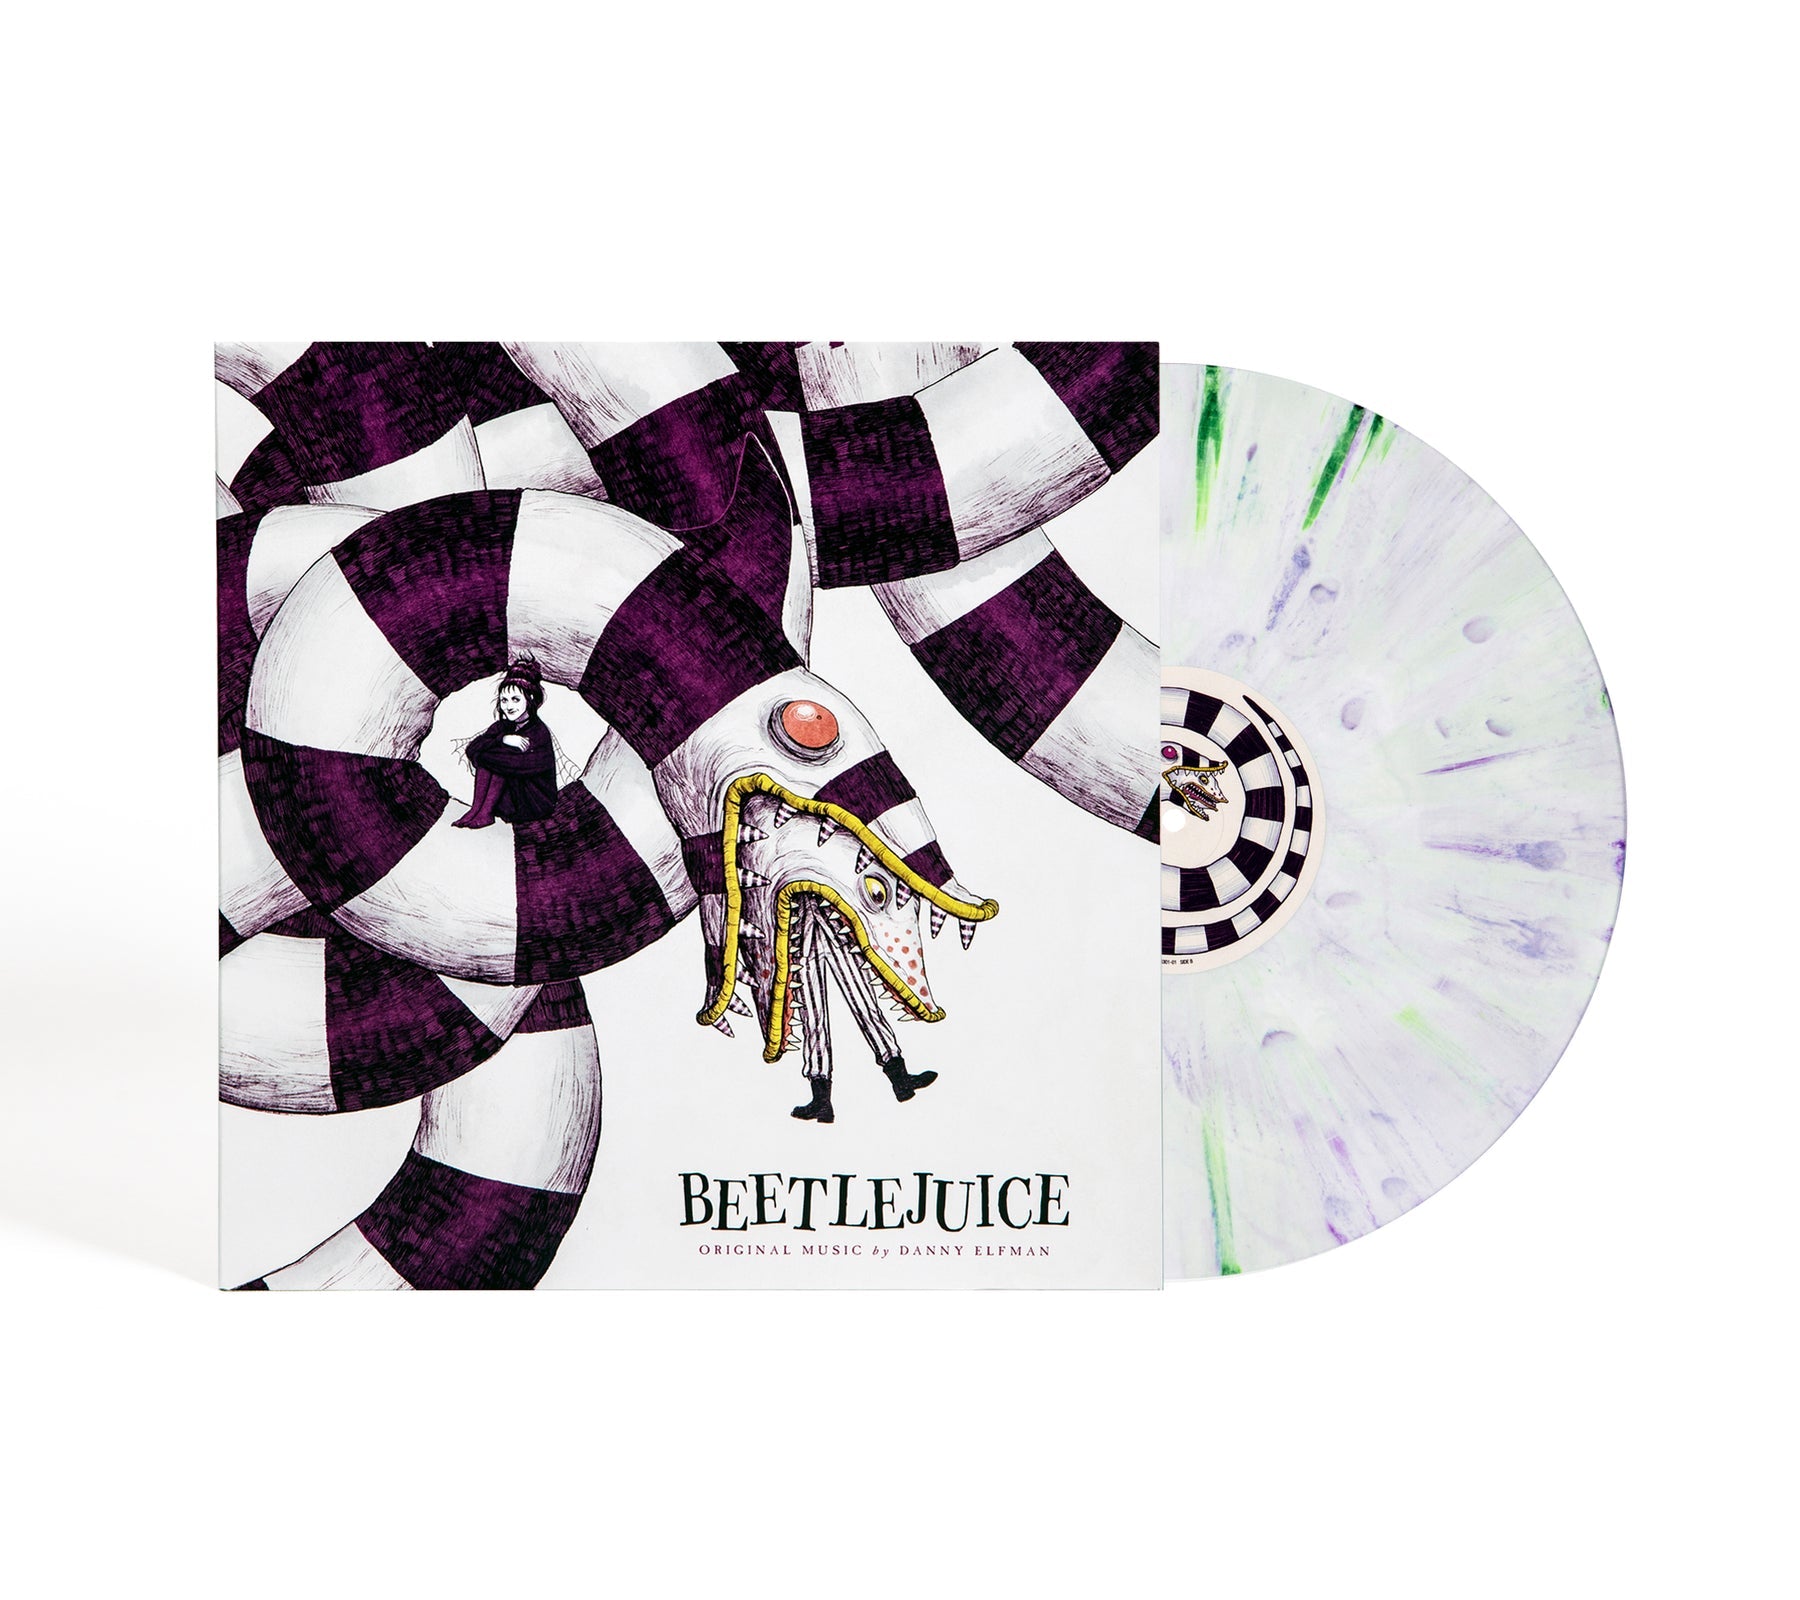 Beetlejuice (Original Motion Picture Soundtrack) - Danny Elfman | Helix Sounds